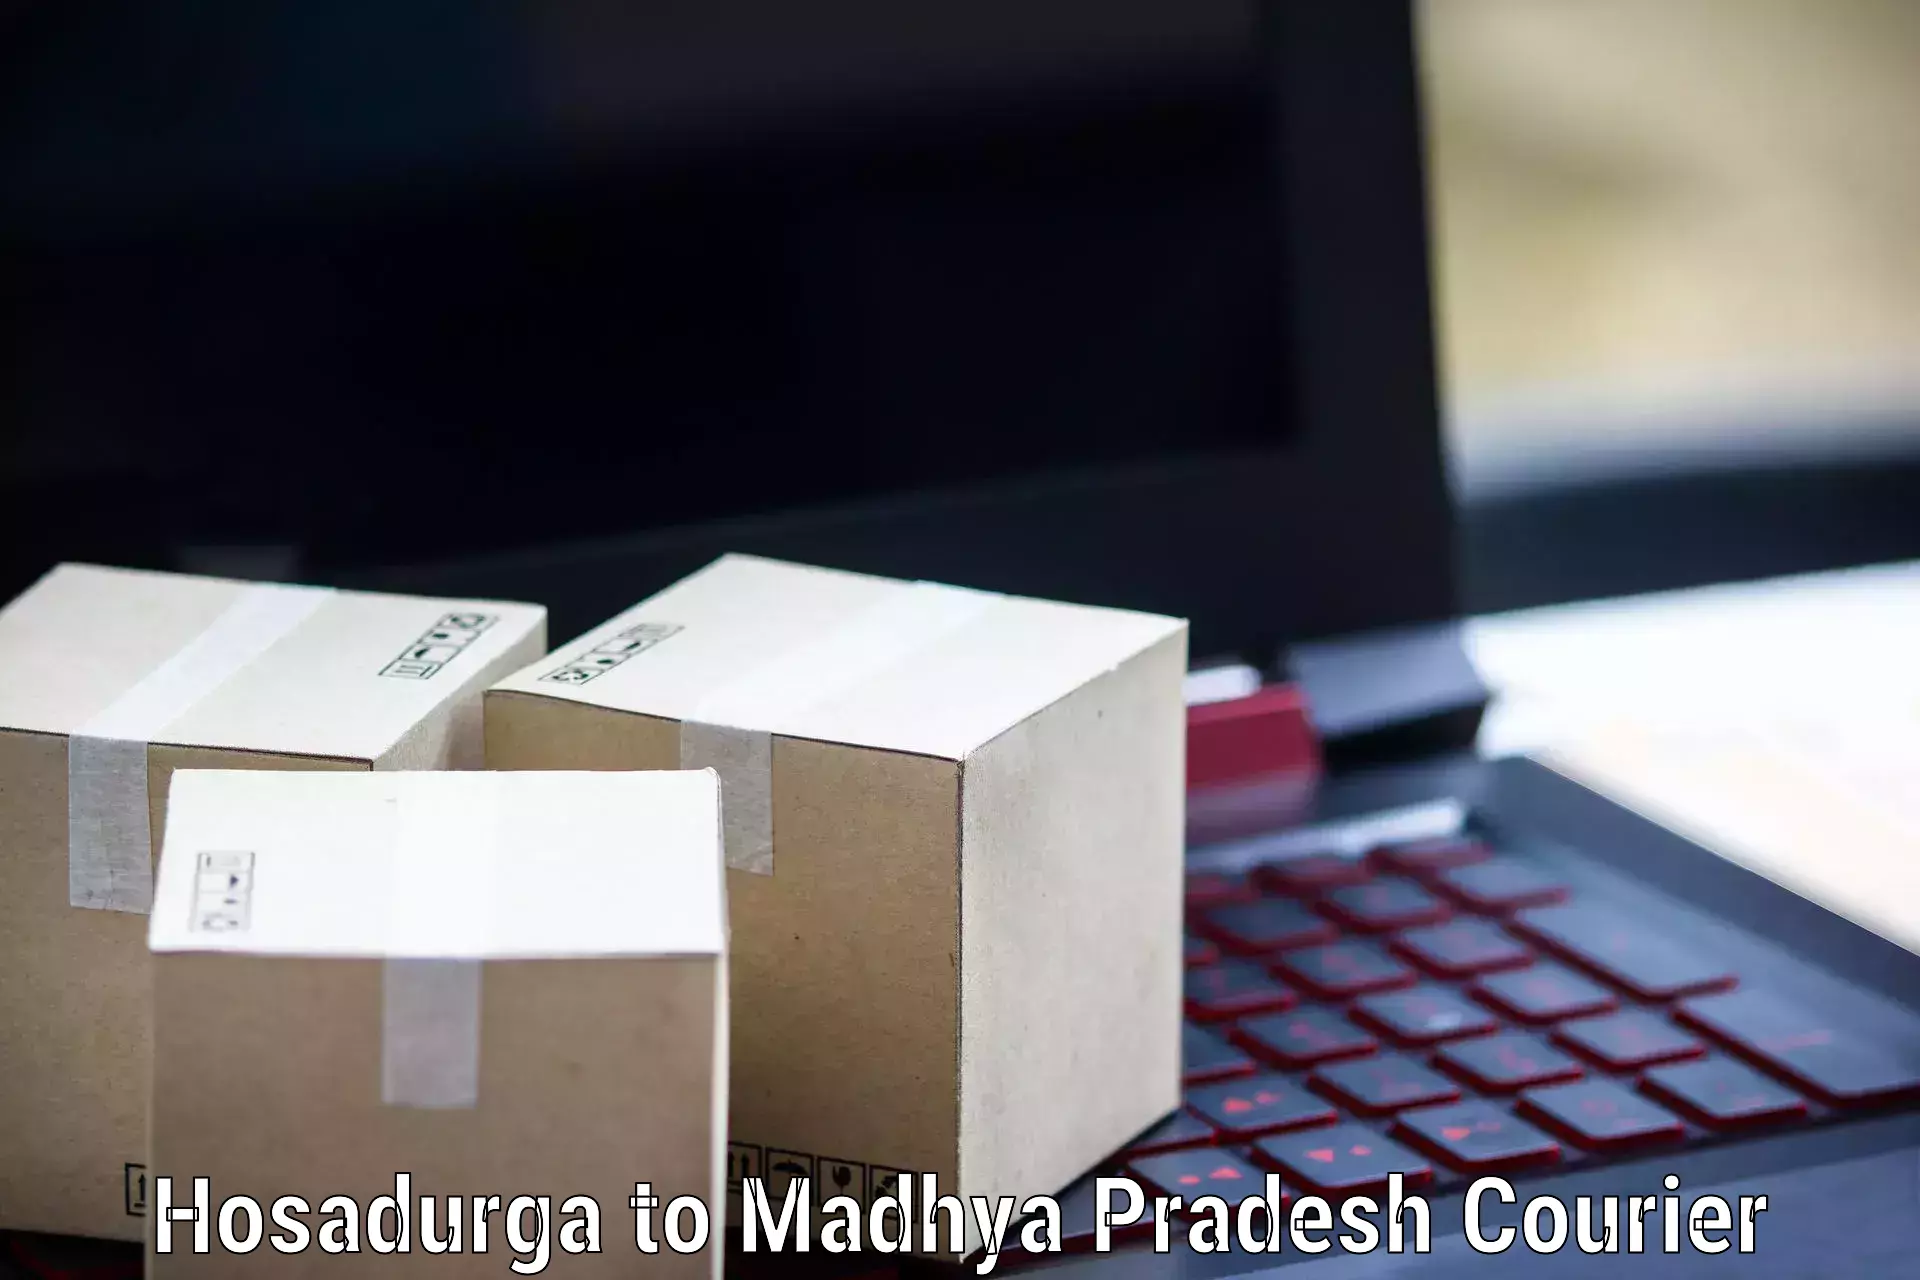 Courier service efficiency Hosadurga to Mandideep